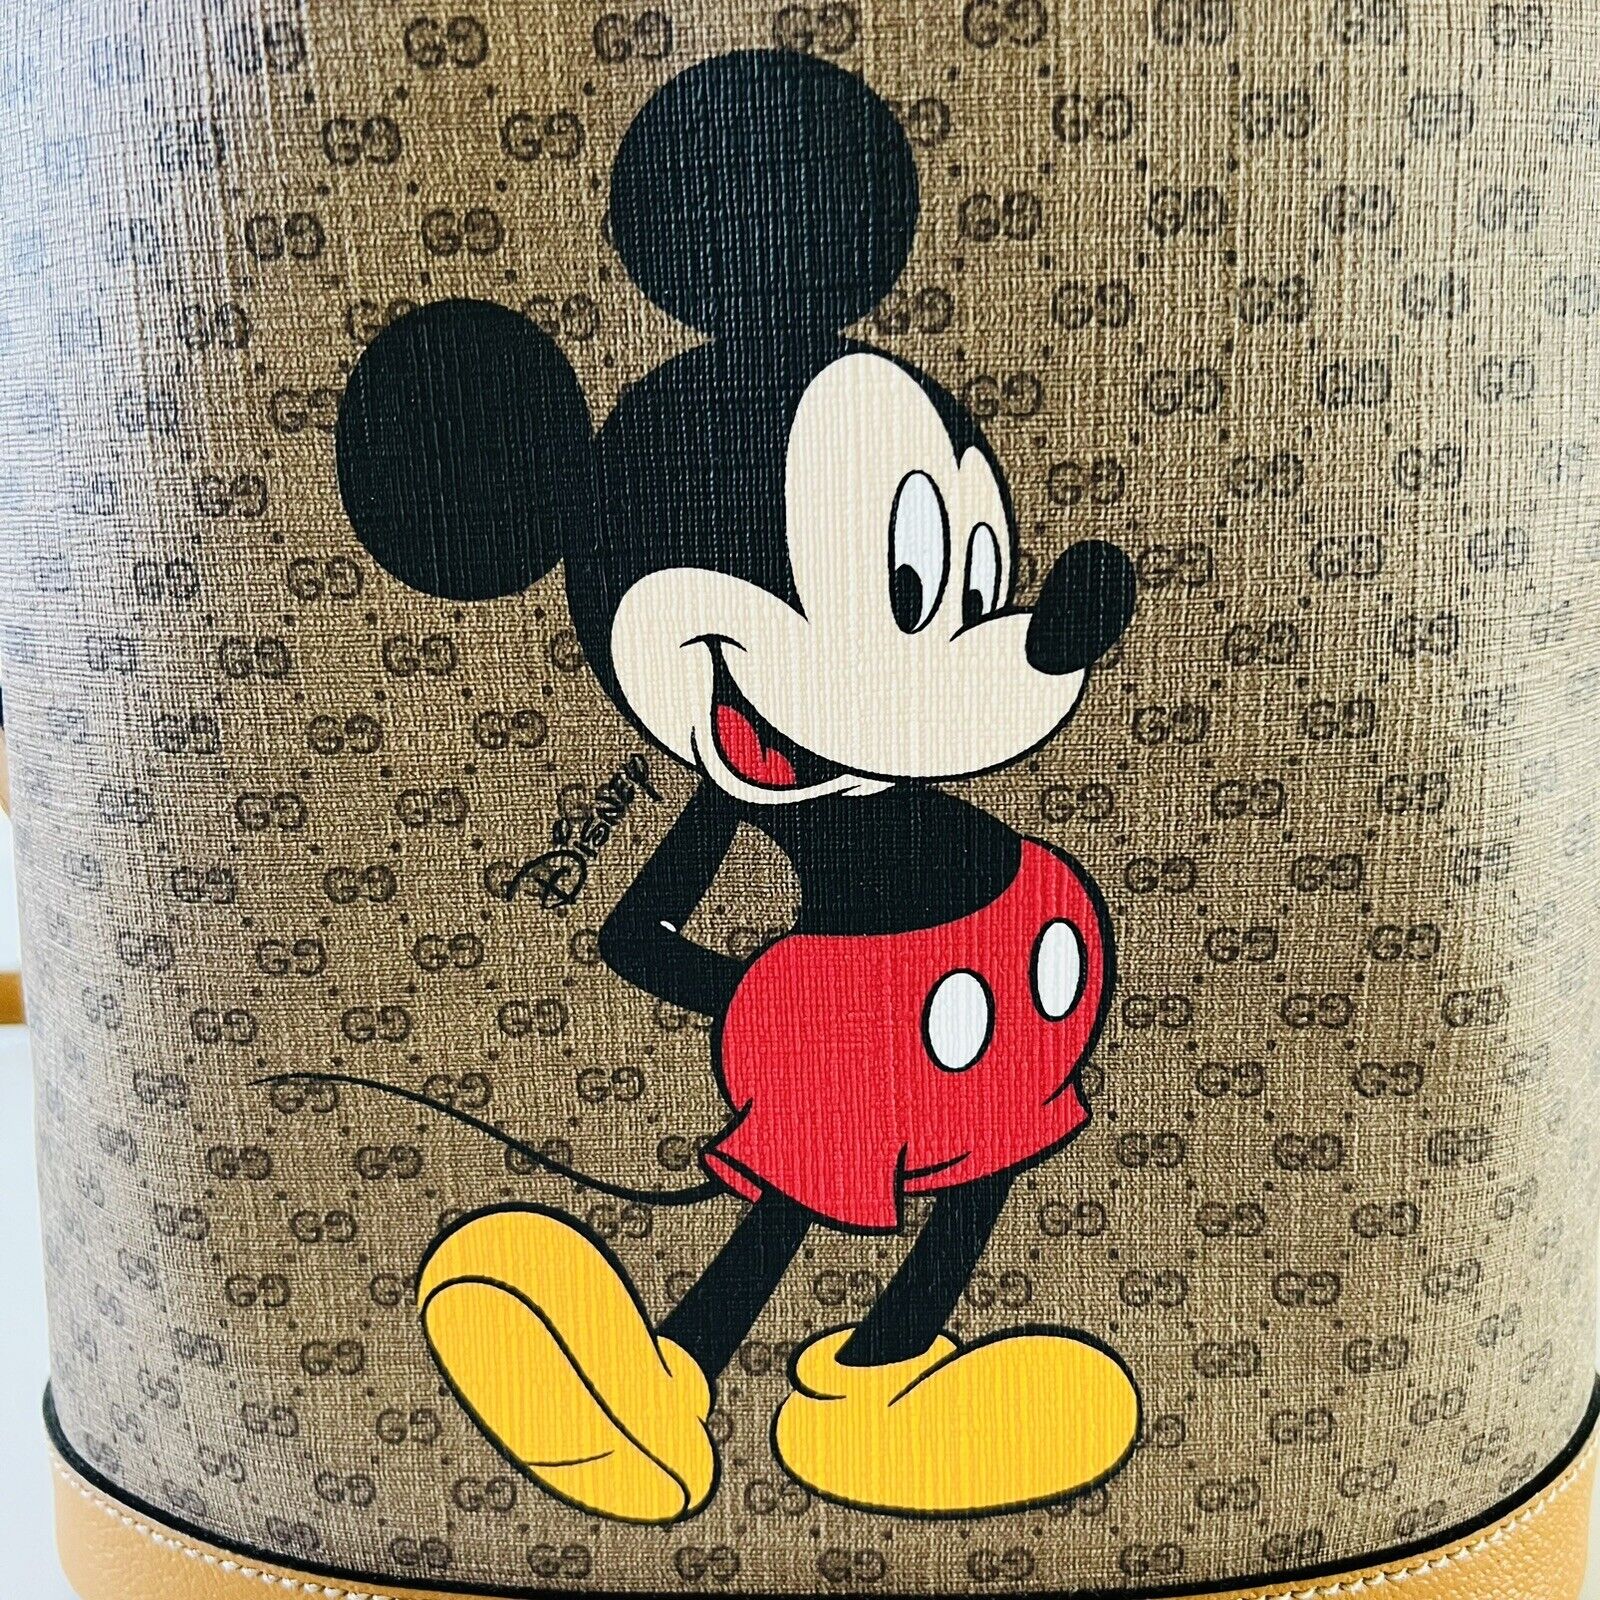 Gucci x Disney Bucket Bag Mickey Mouse Shoulder Bag